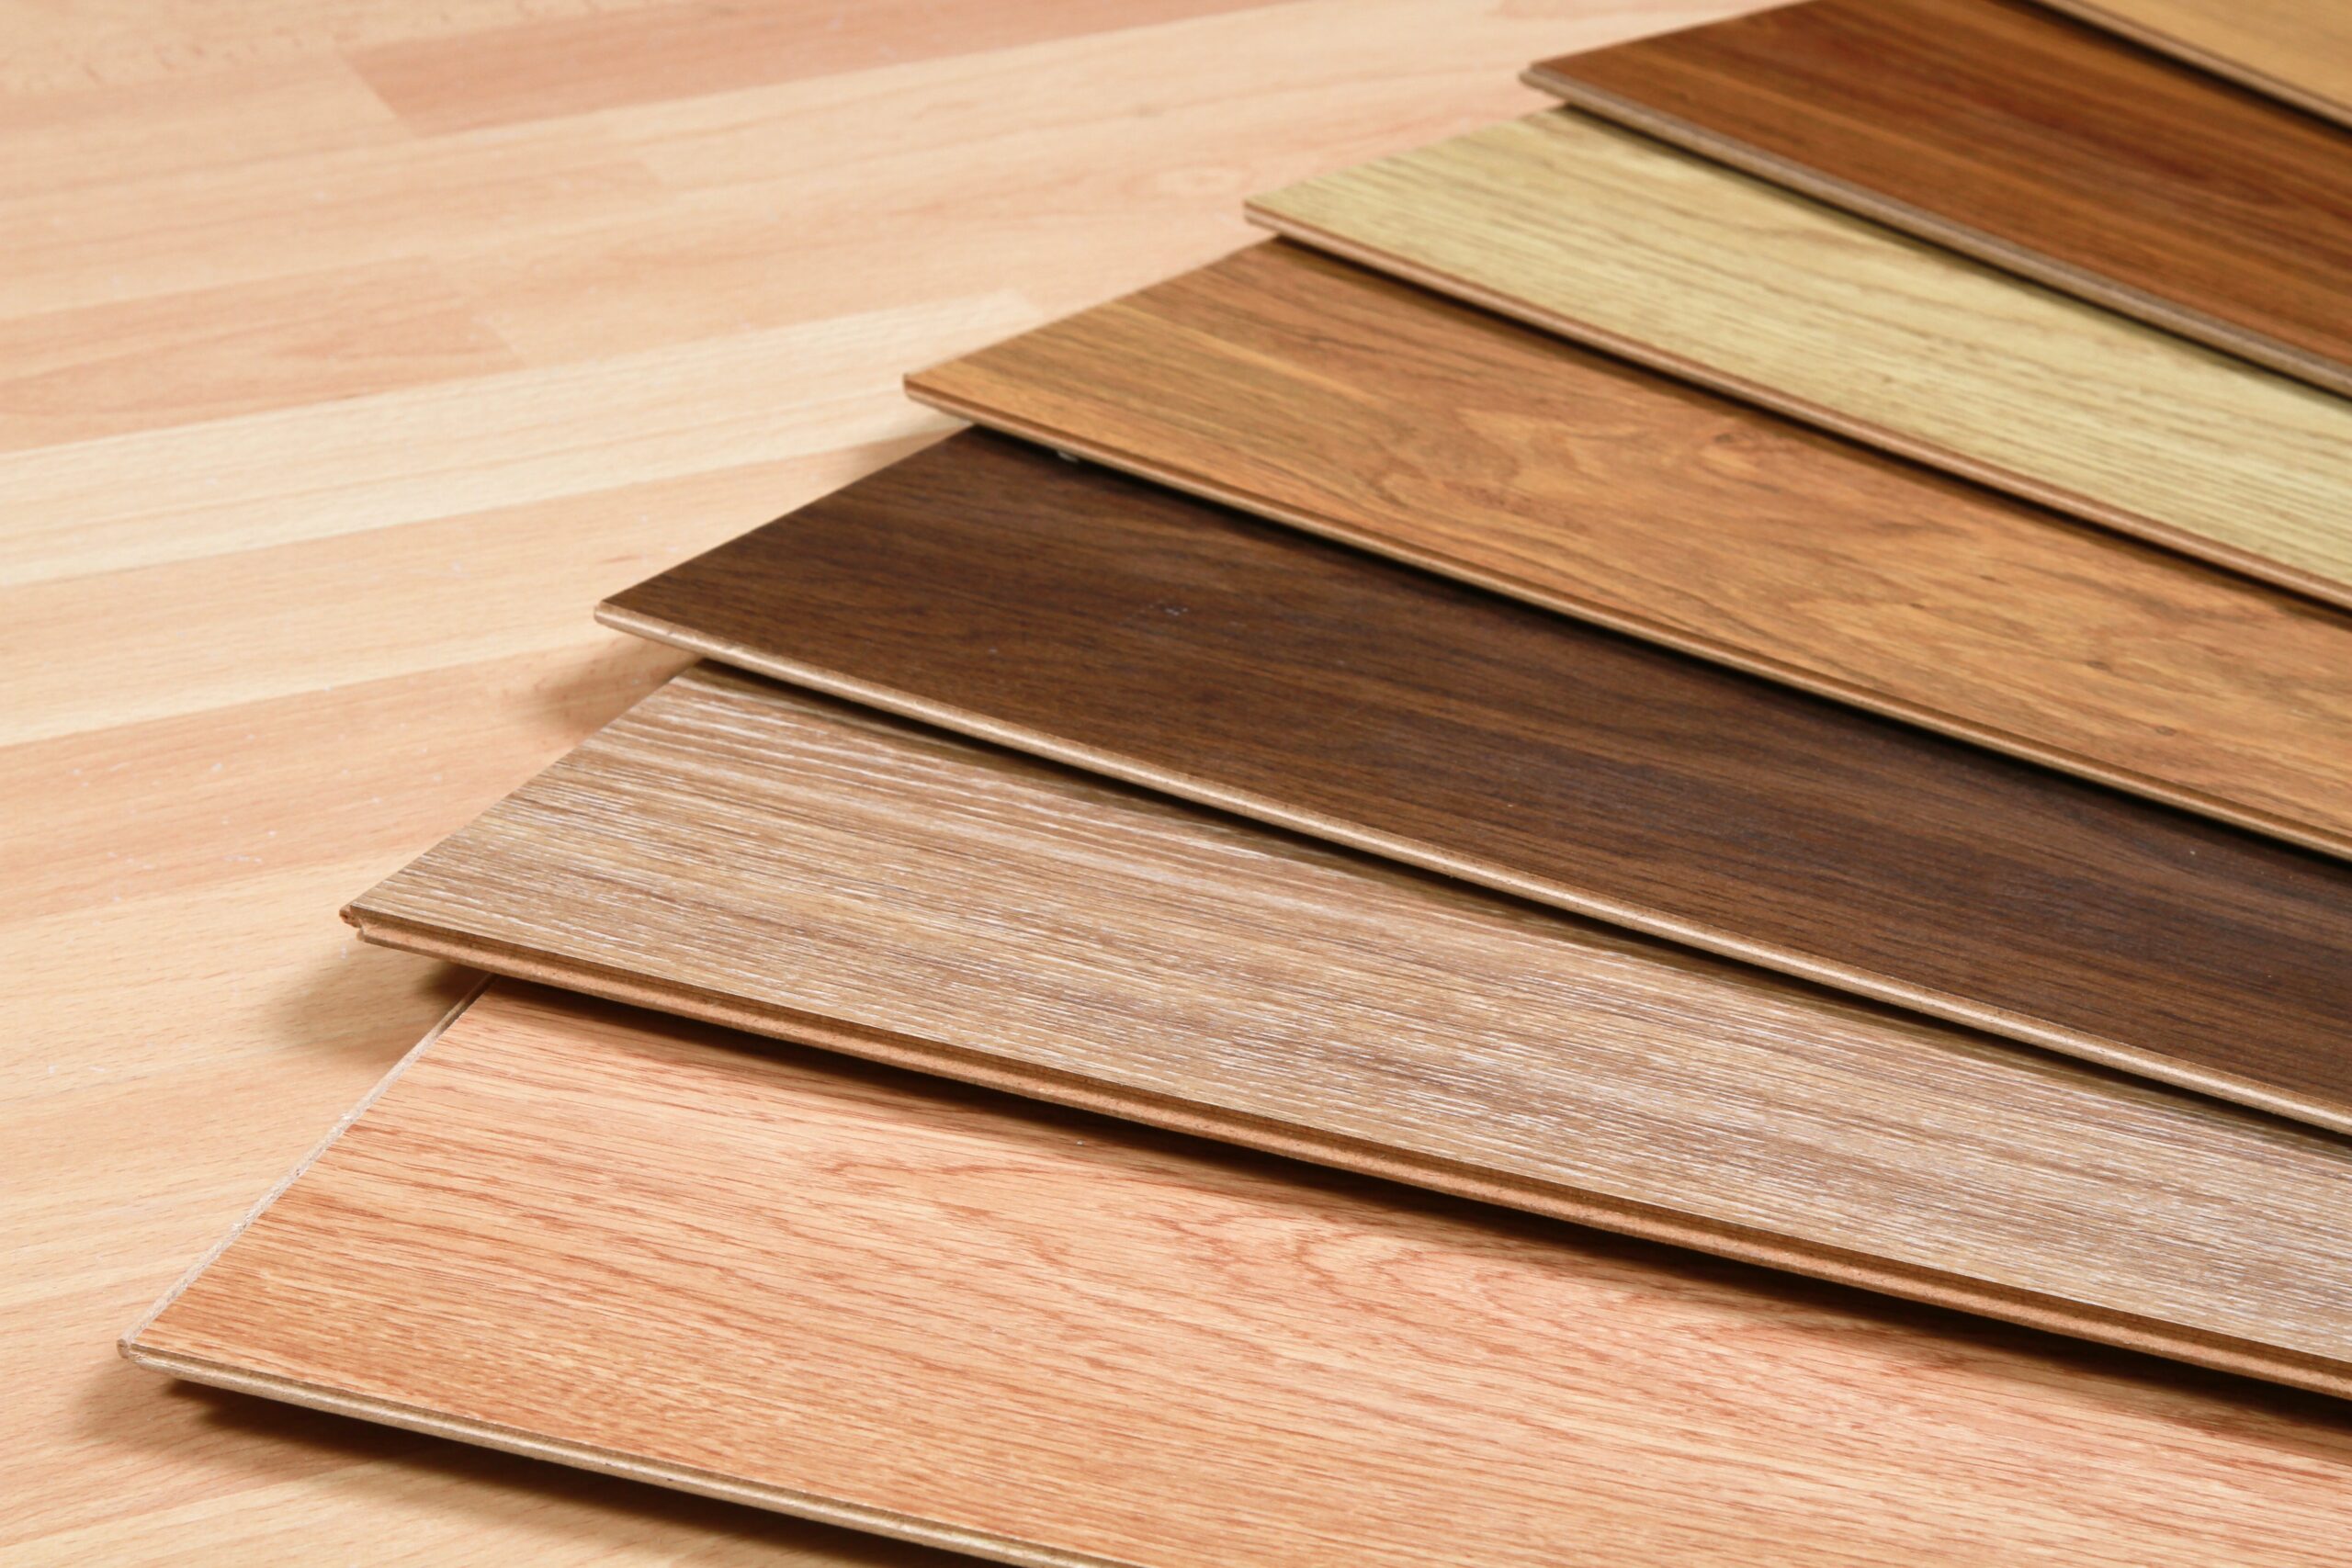 hardwood flooring types